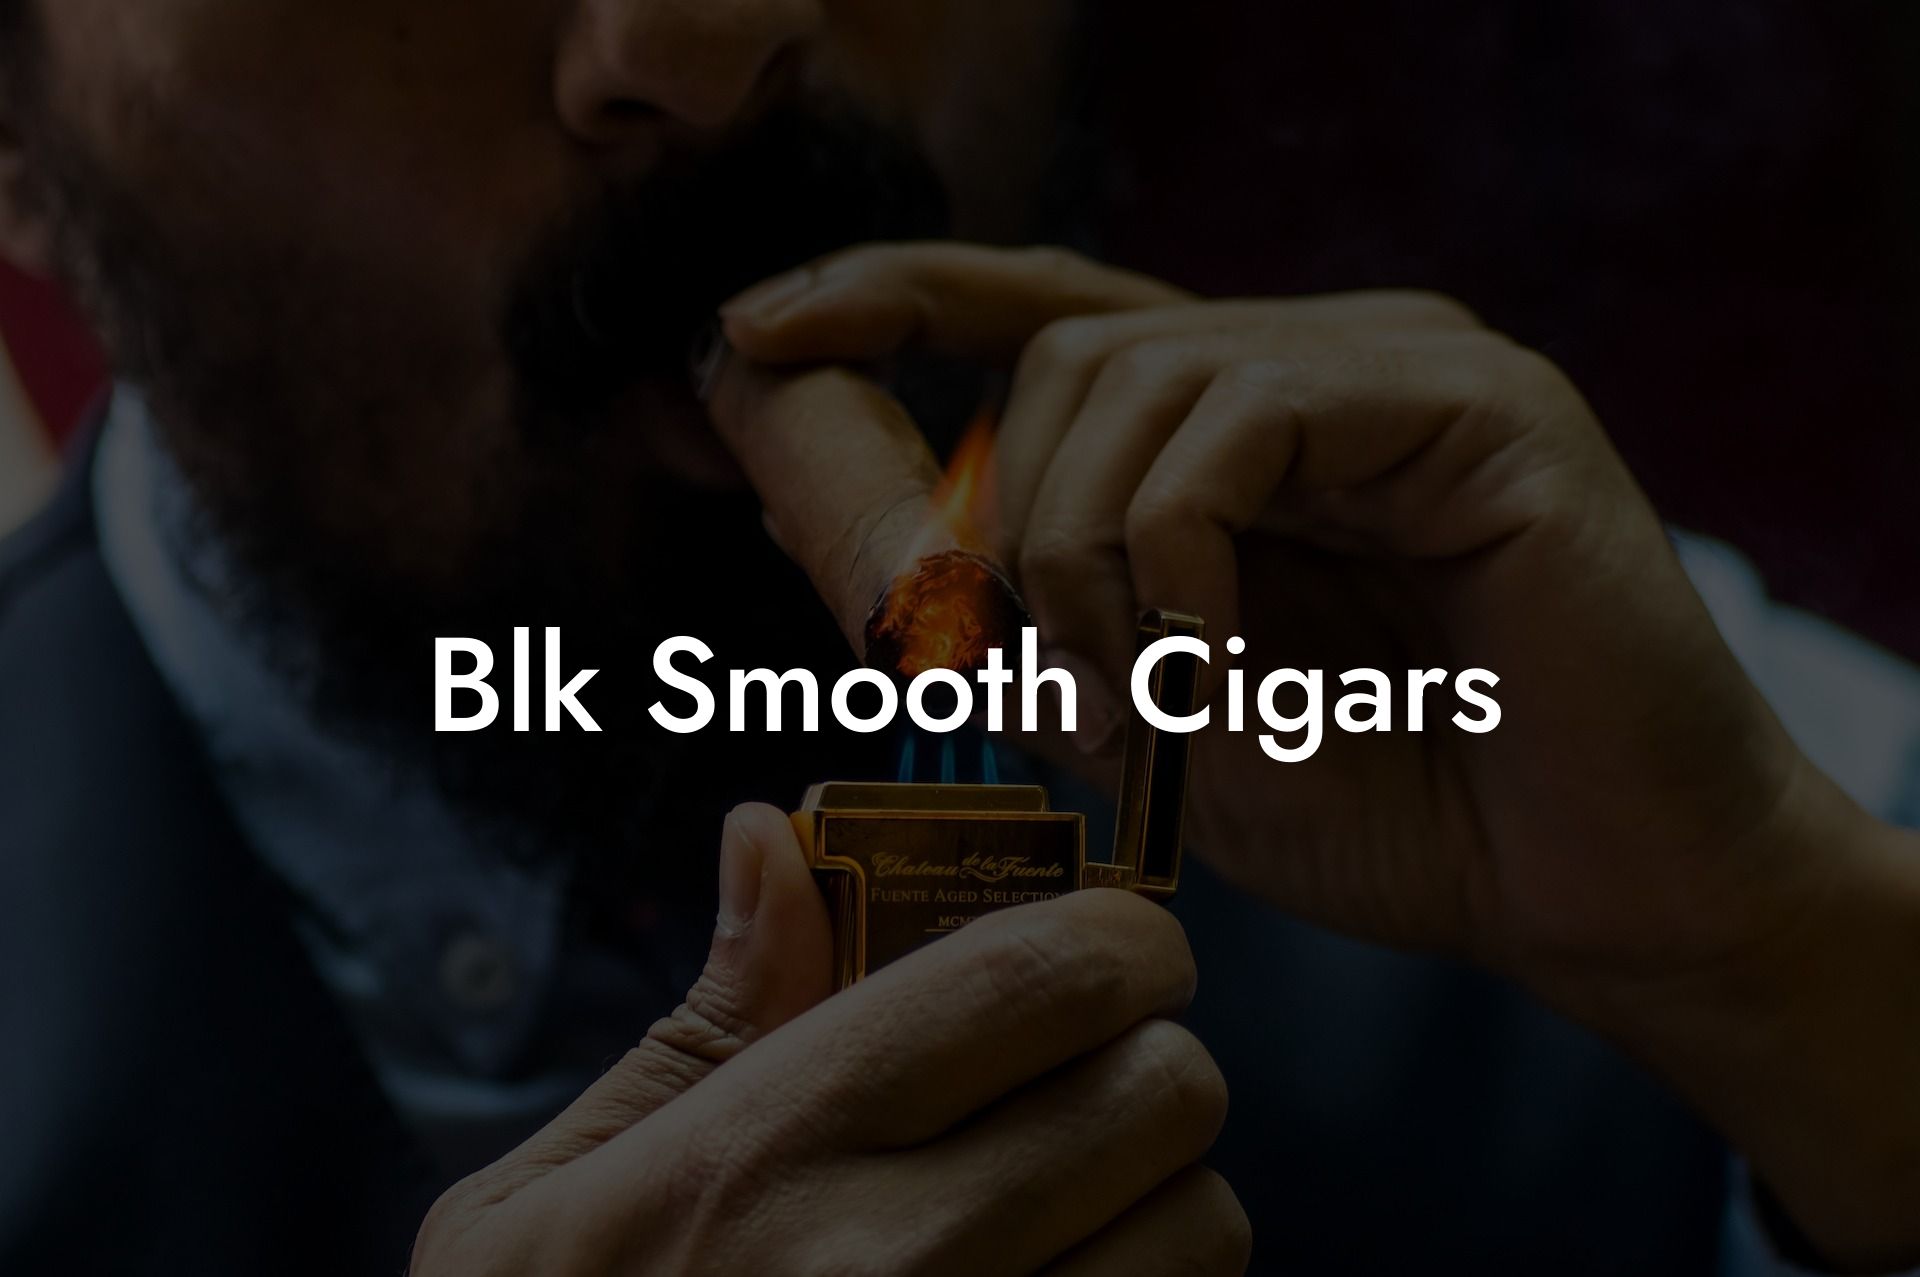 Blk Smooth Cigars